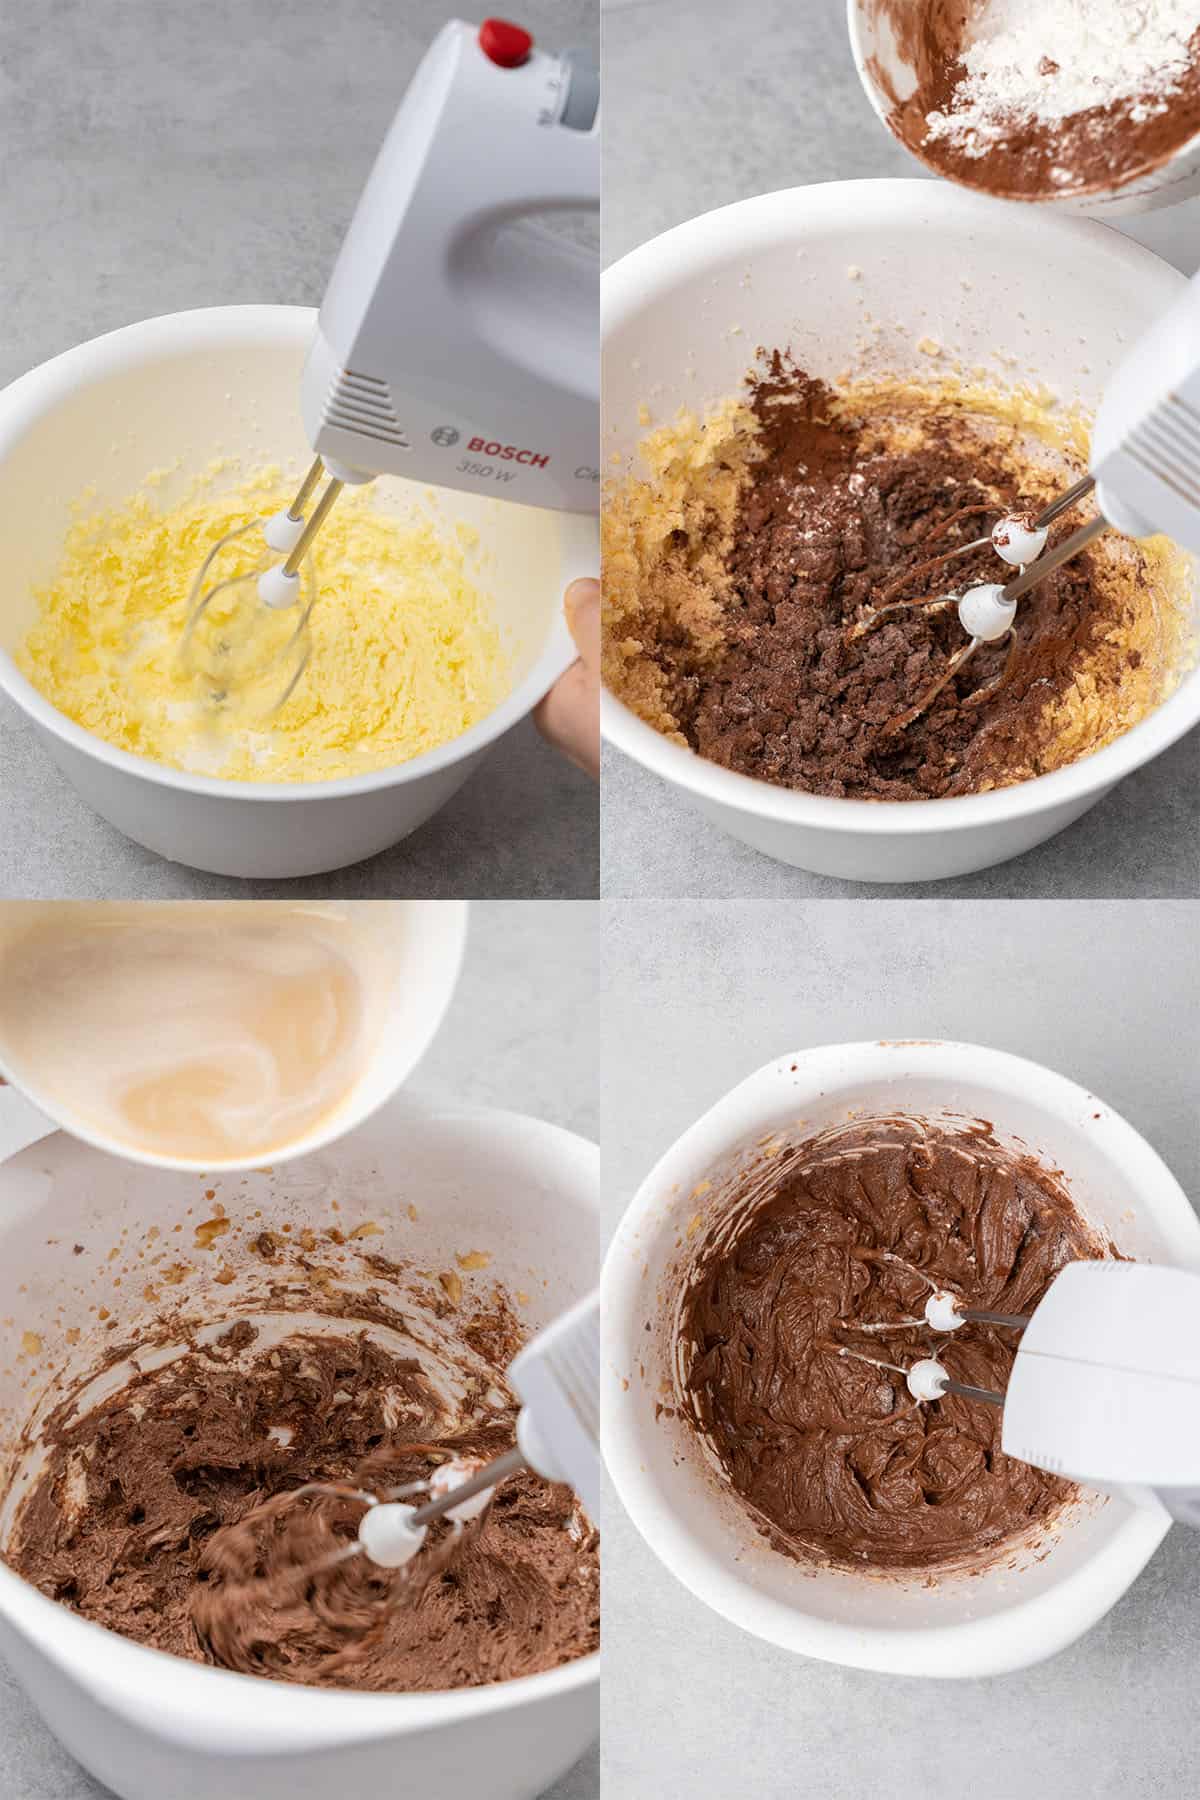 Chocolate cupcake step-by-step process.